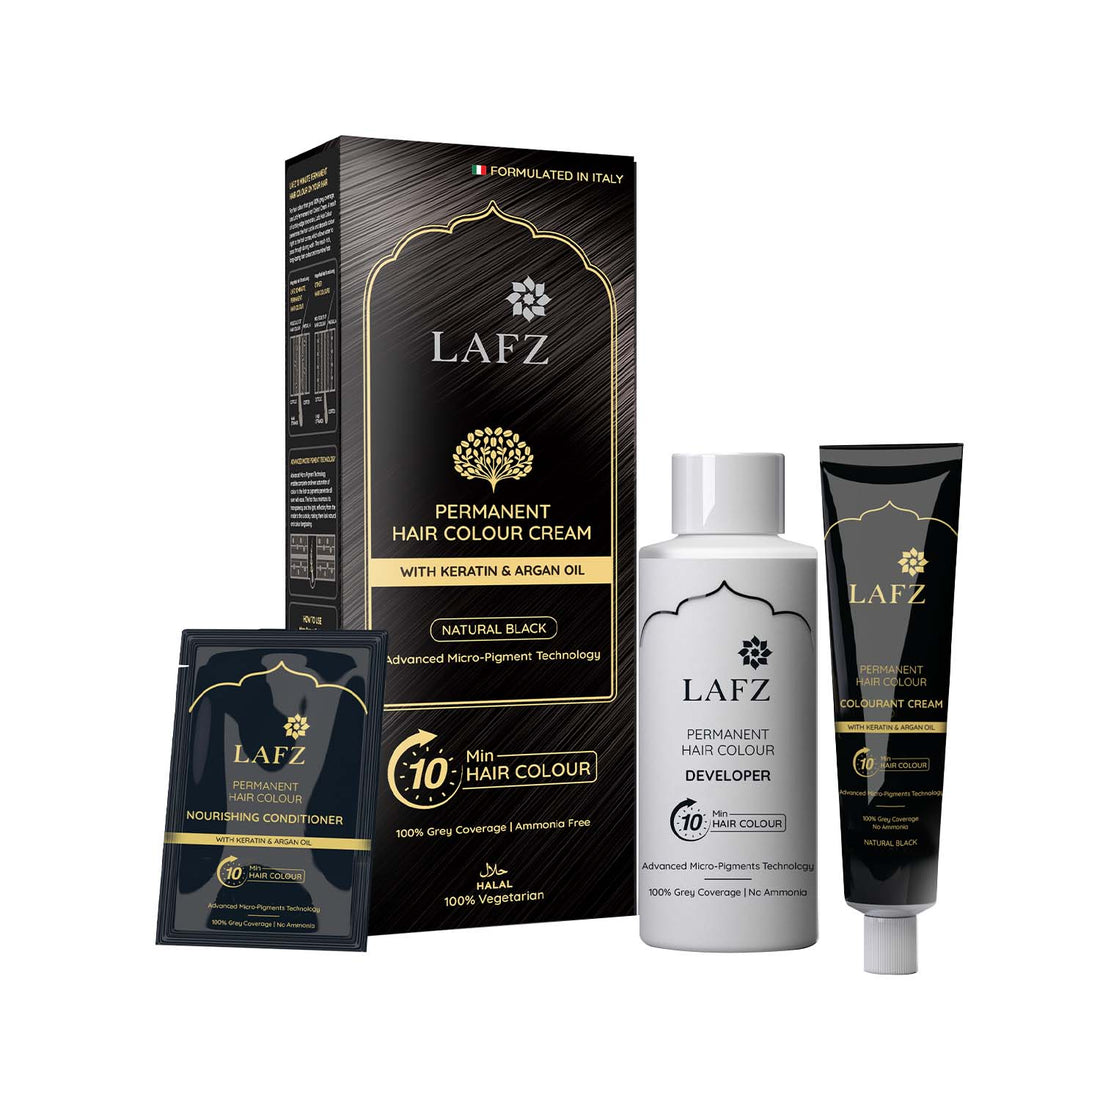 Lafz Permanent 10 Min Hair Color Cream Dubai (40ml) - Natural Black  B1G1